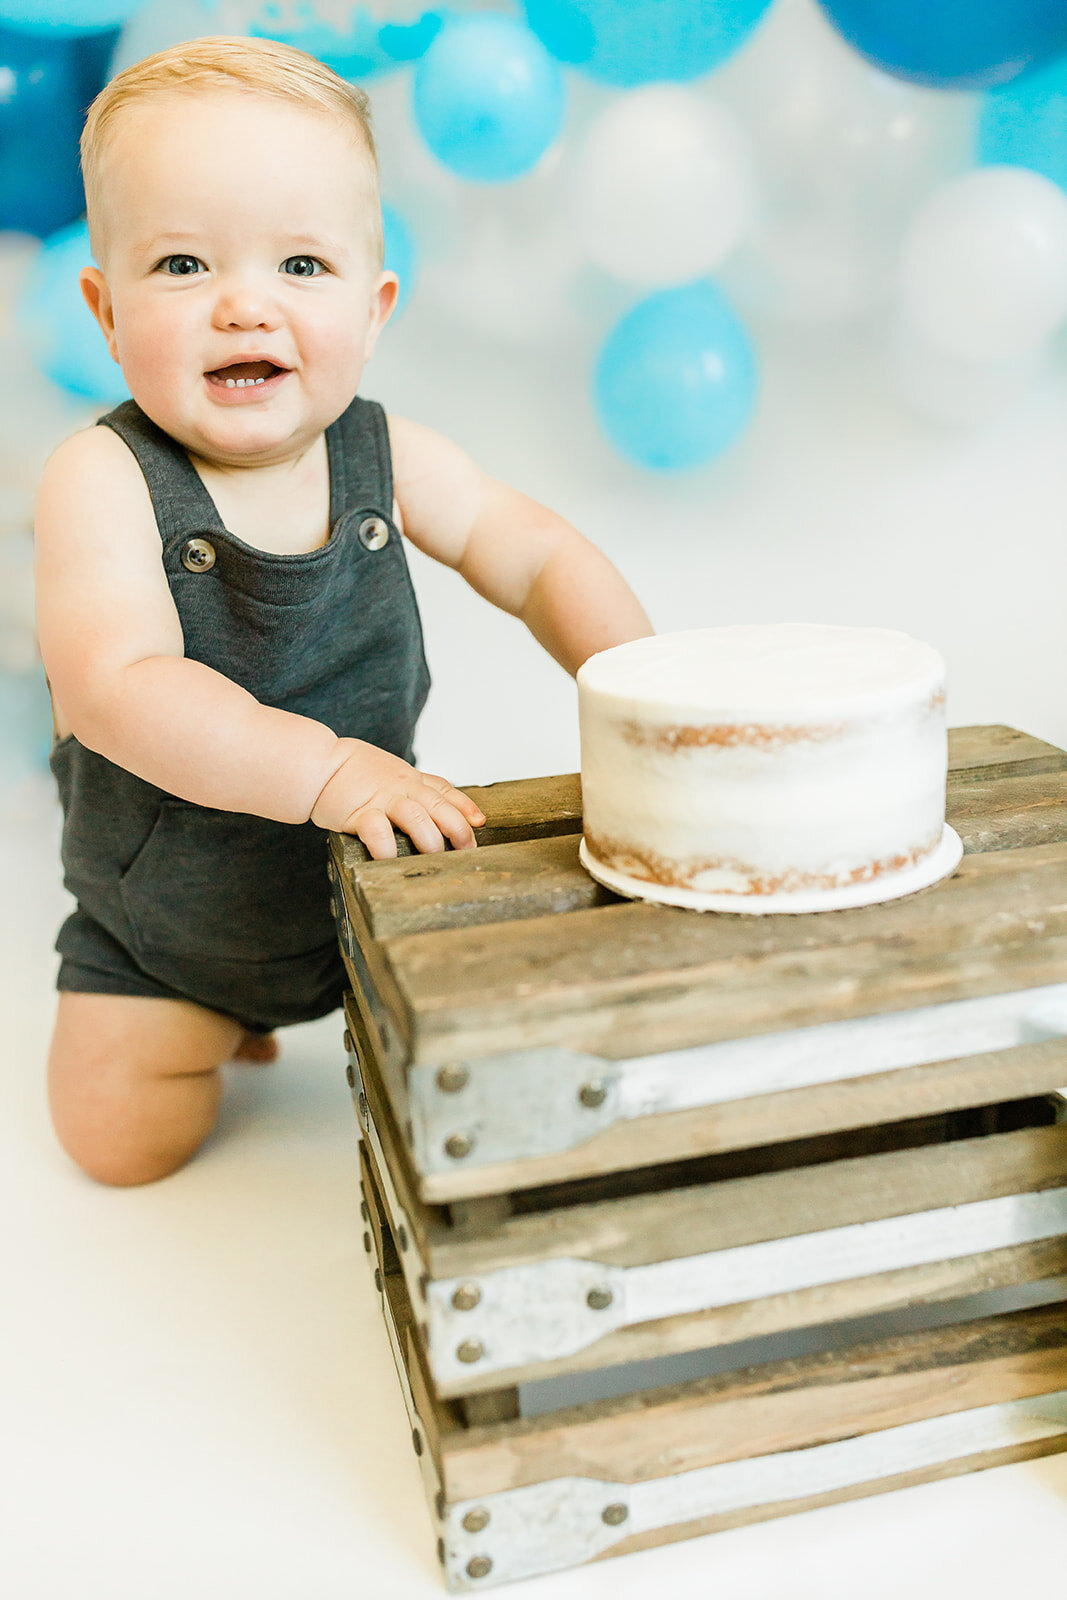 Cake Smash Baby Boy